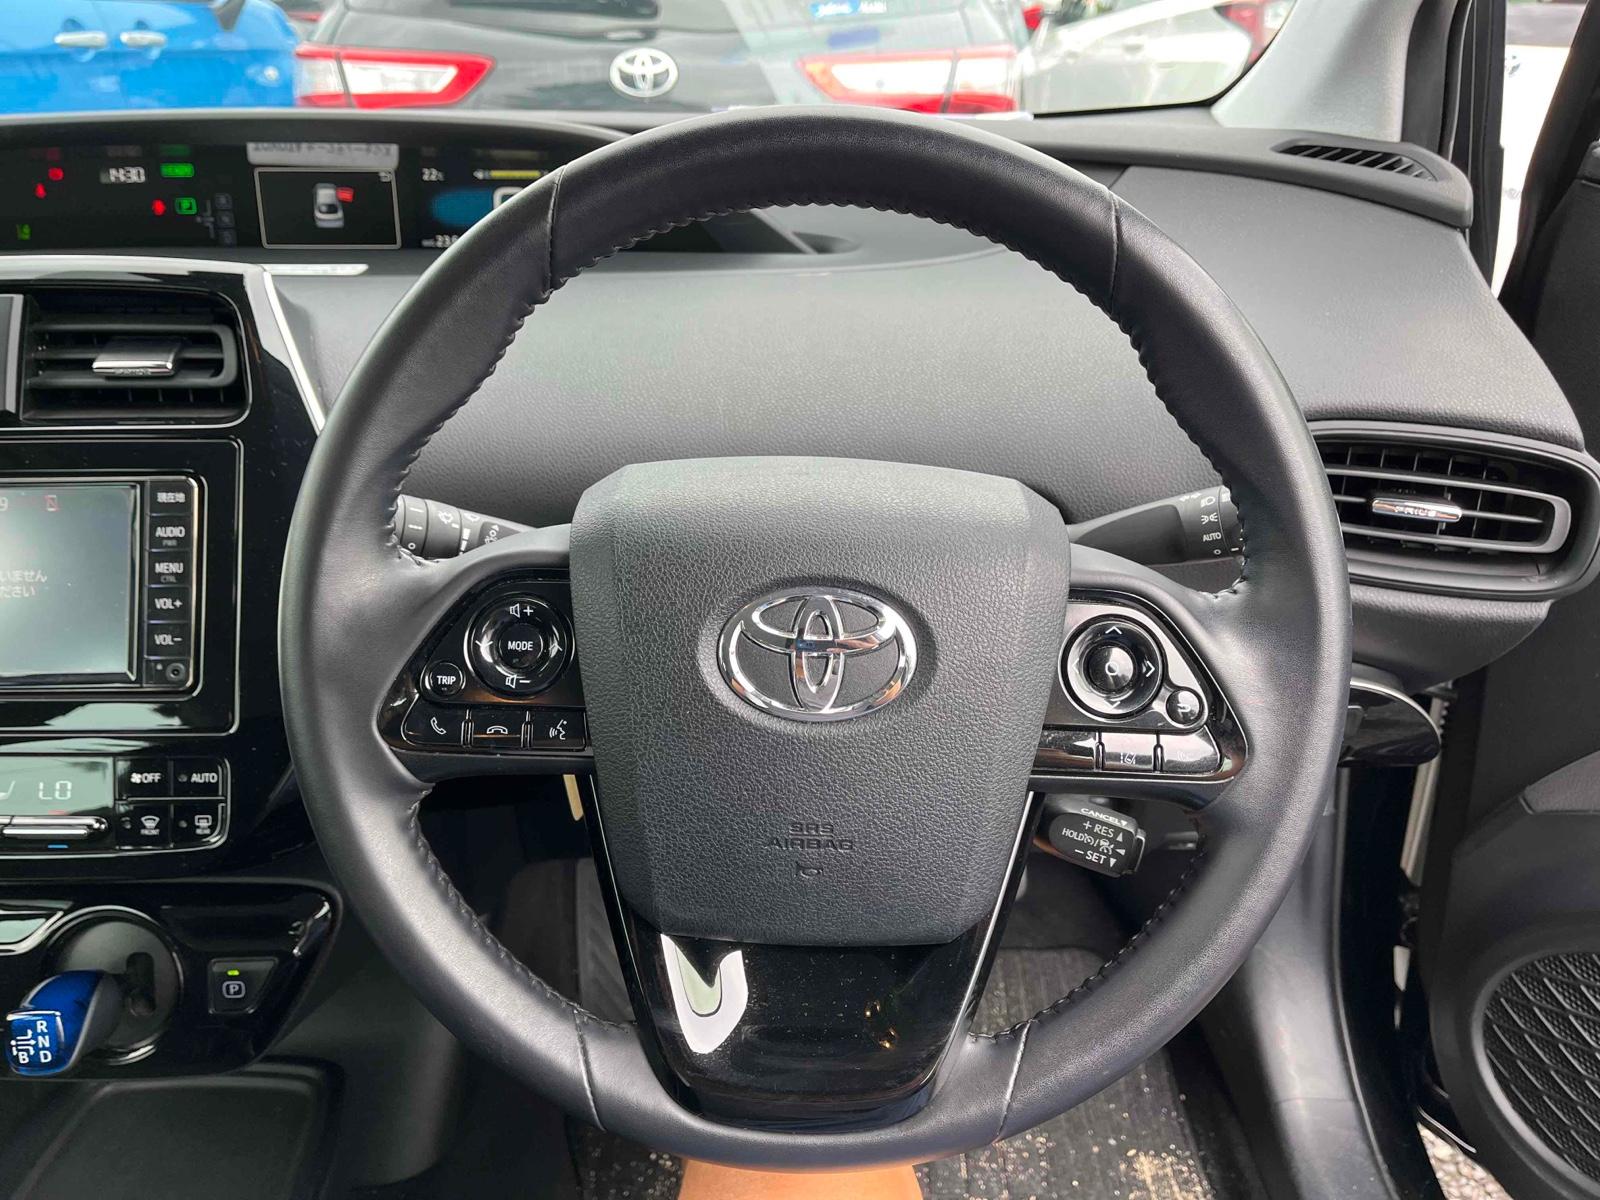 Toyota Prius S